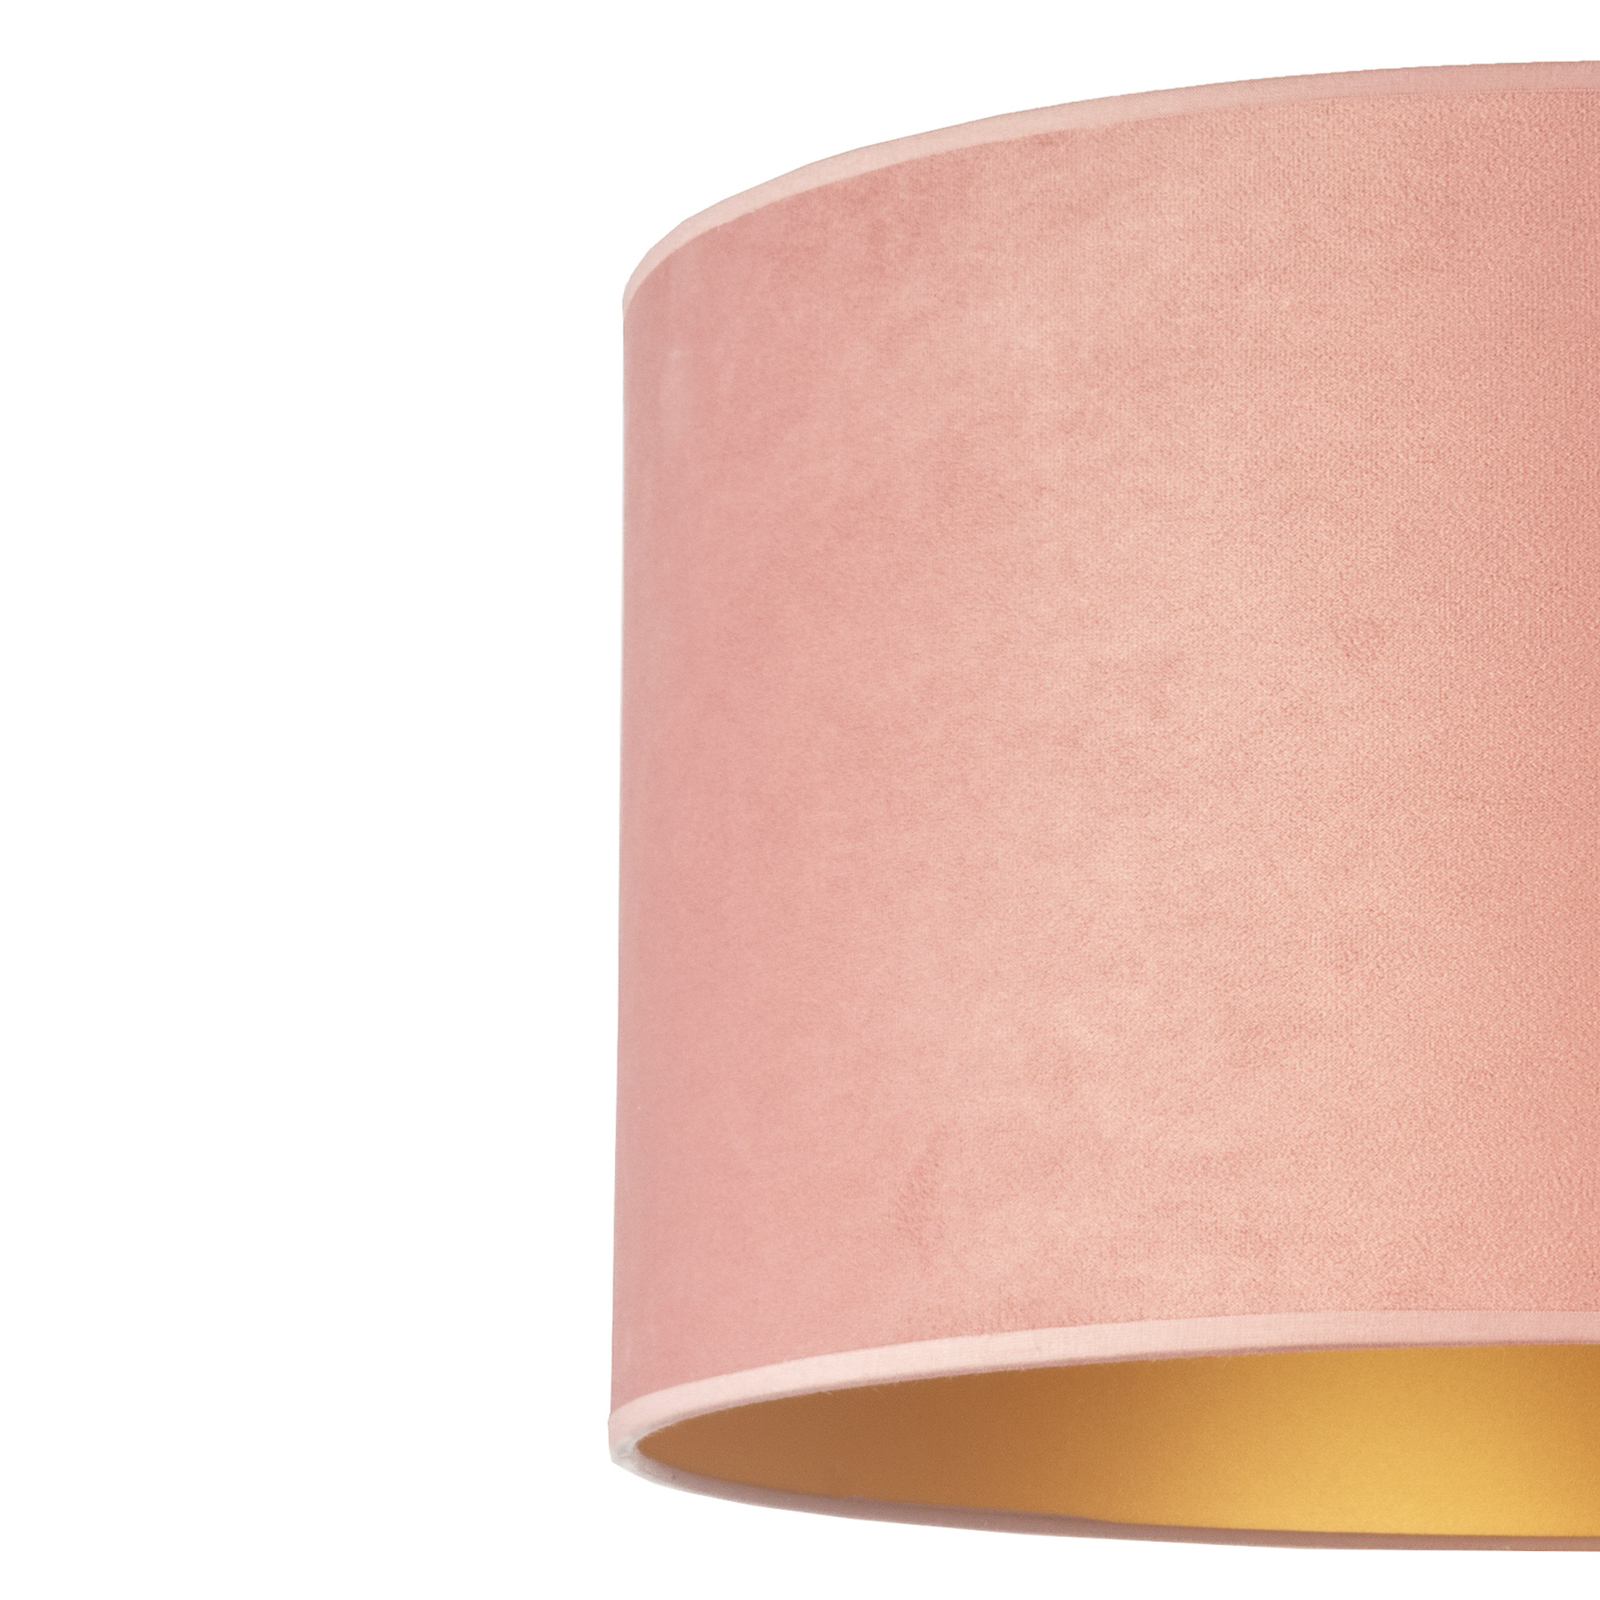 Golden Roller table lamp 30 cm light pink/gold